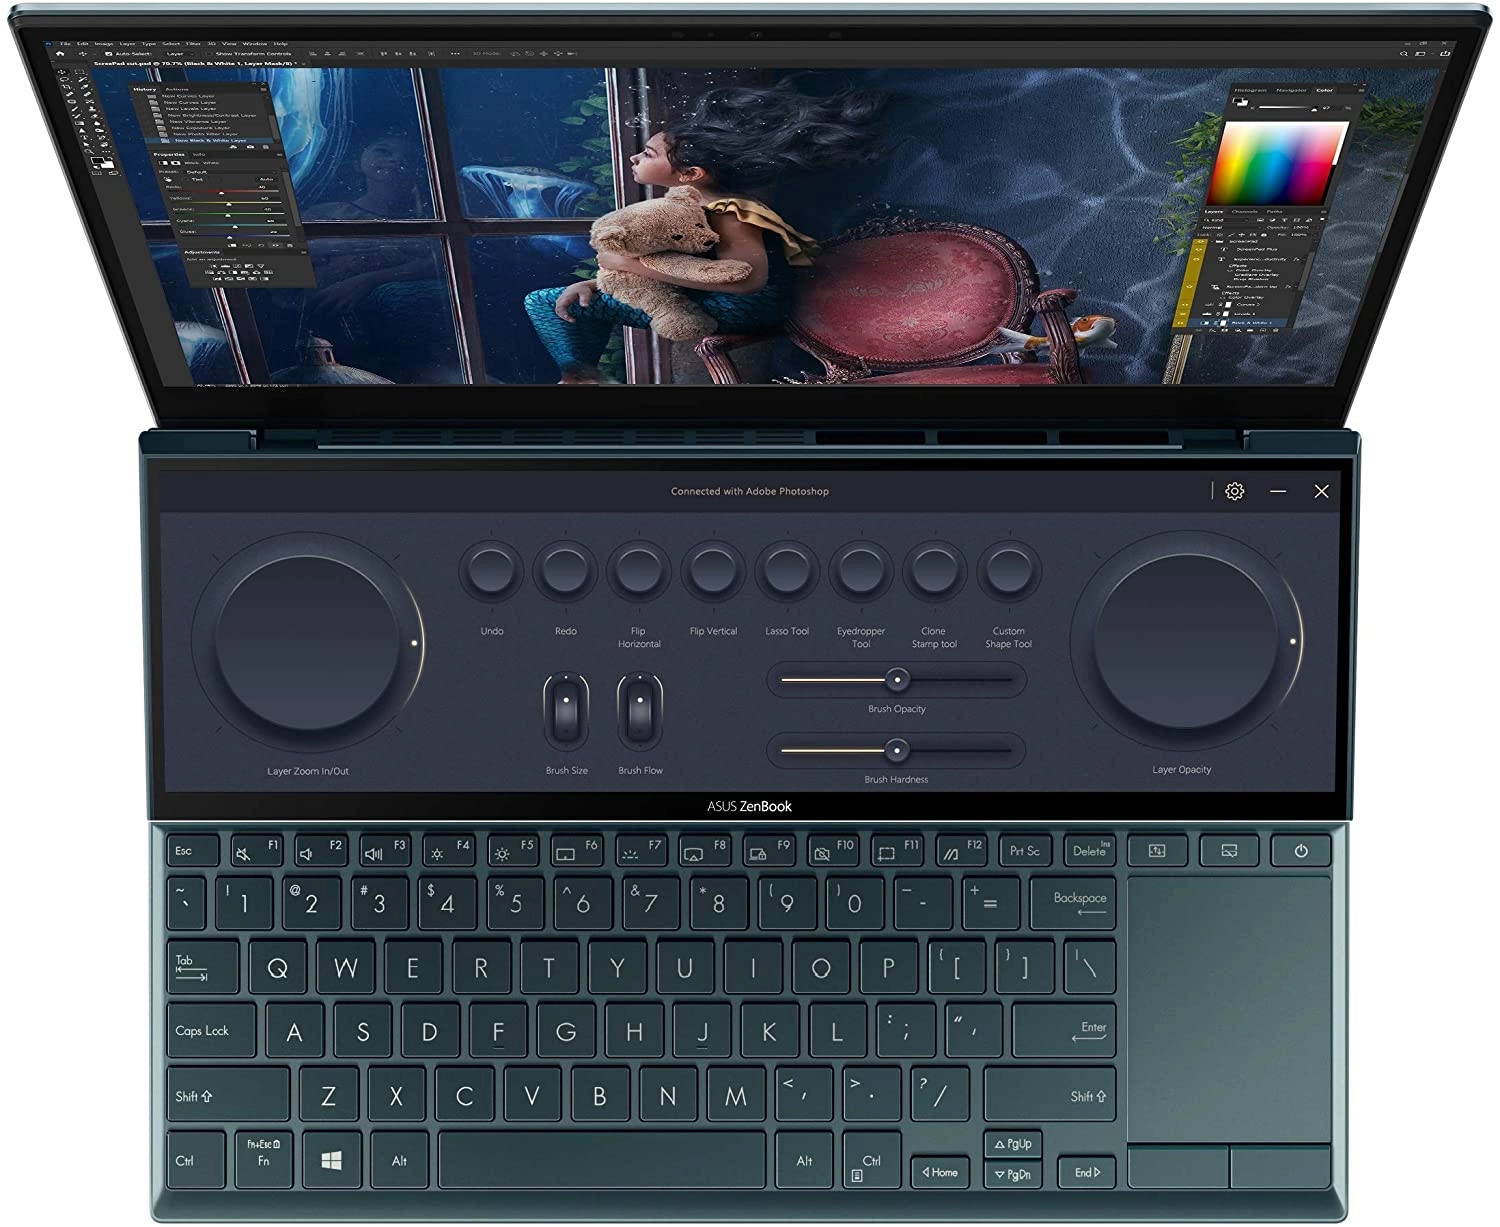 Asus ZenBook Duo 14 UX482 laptop image